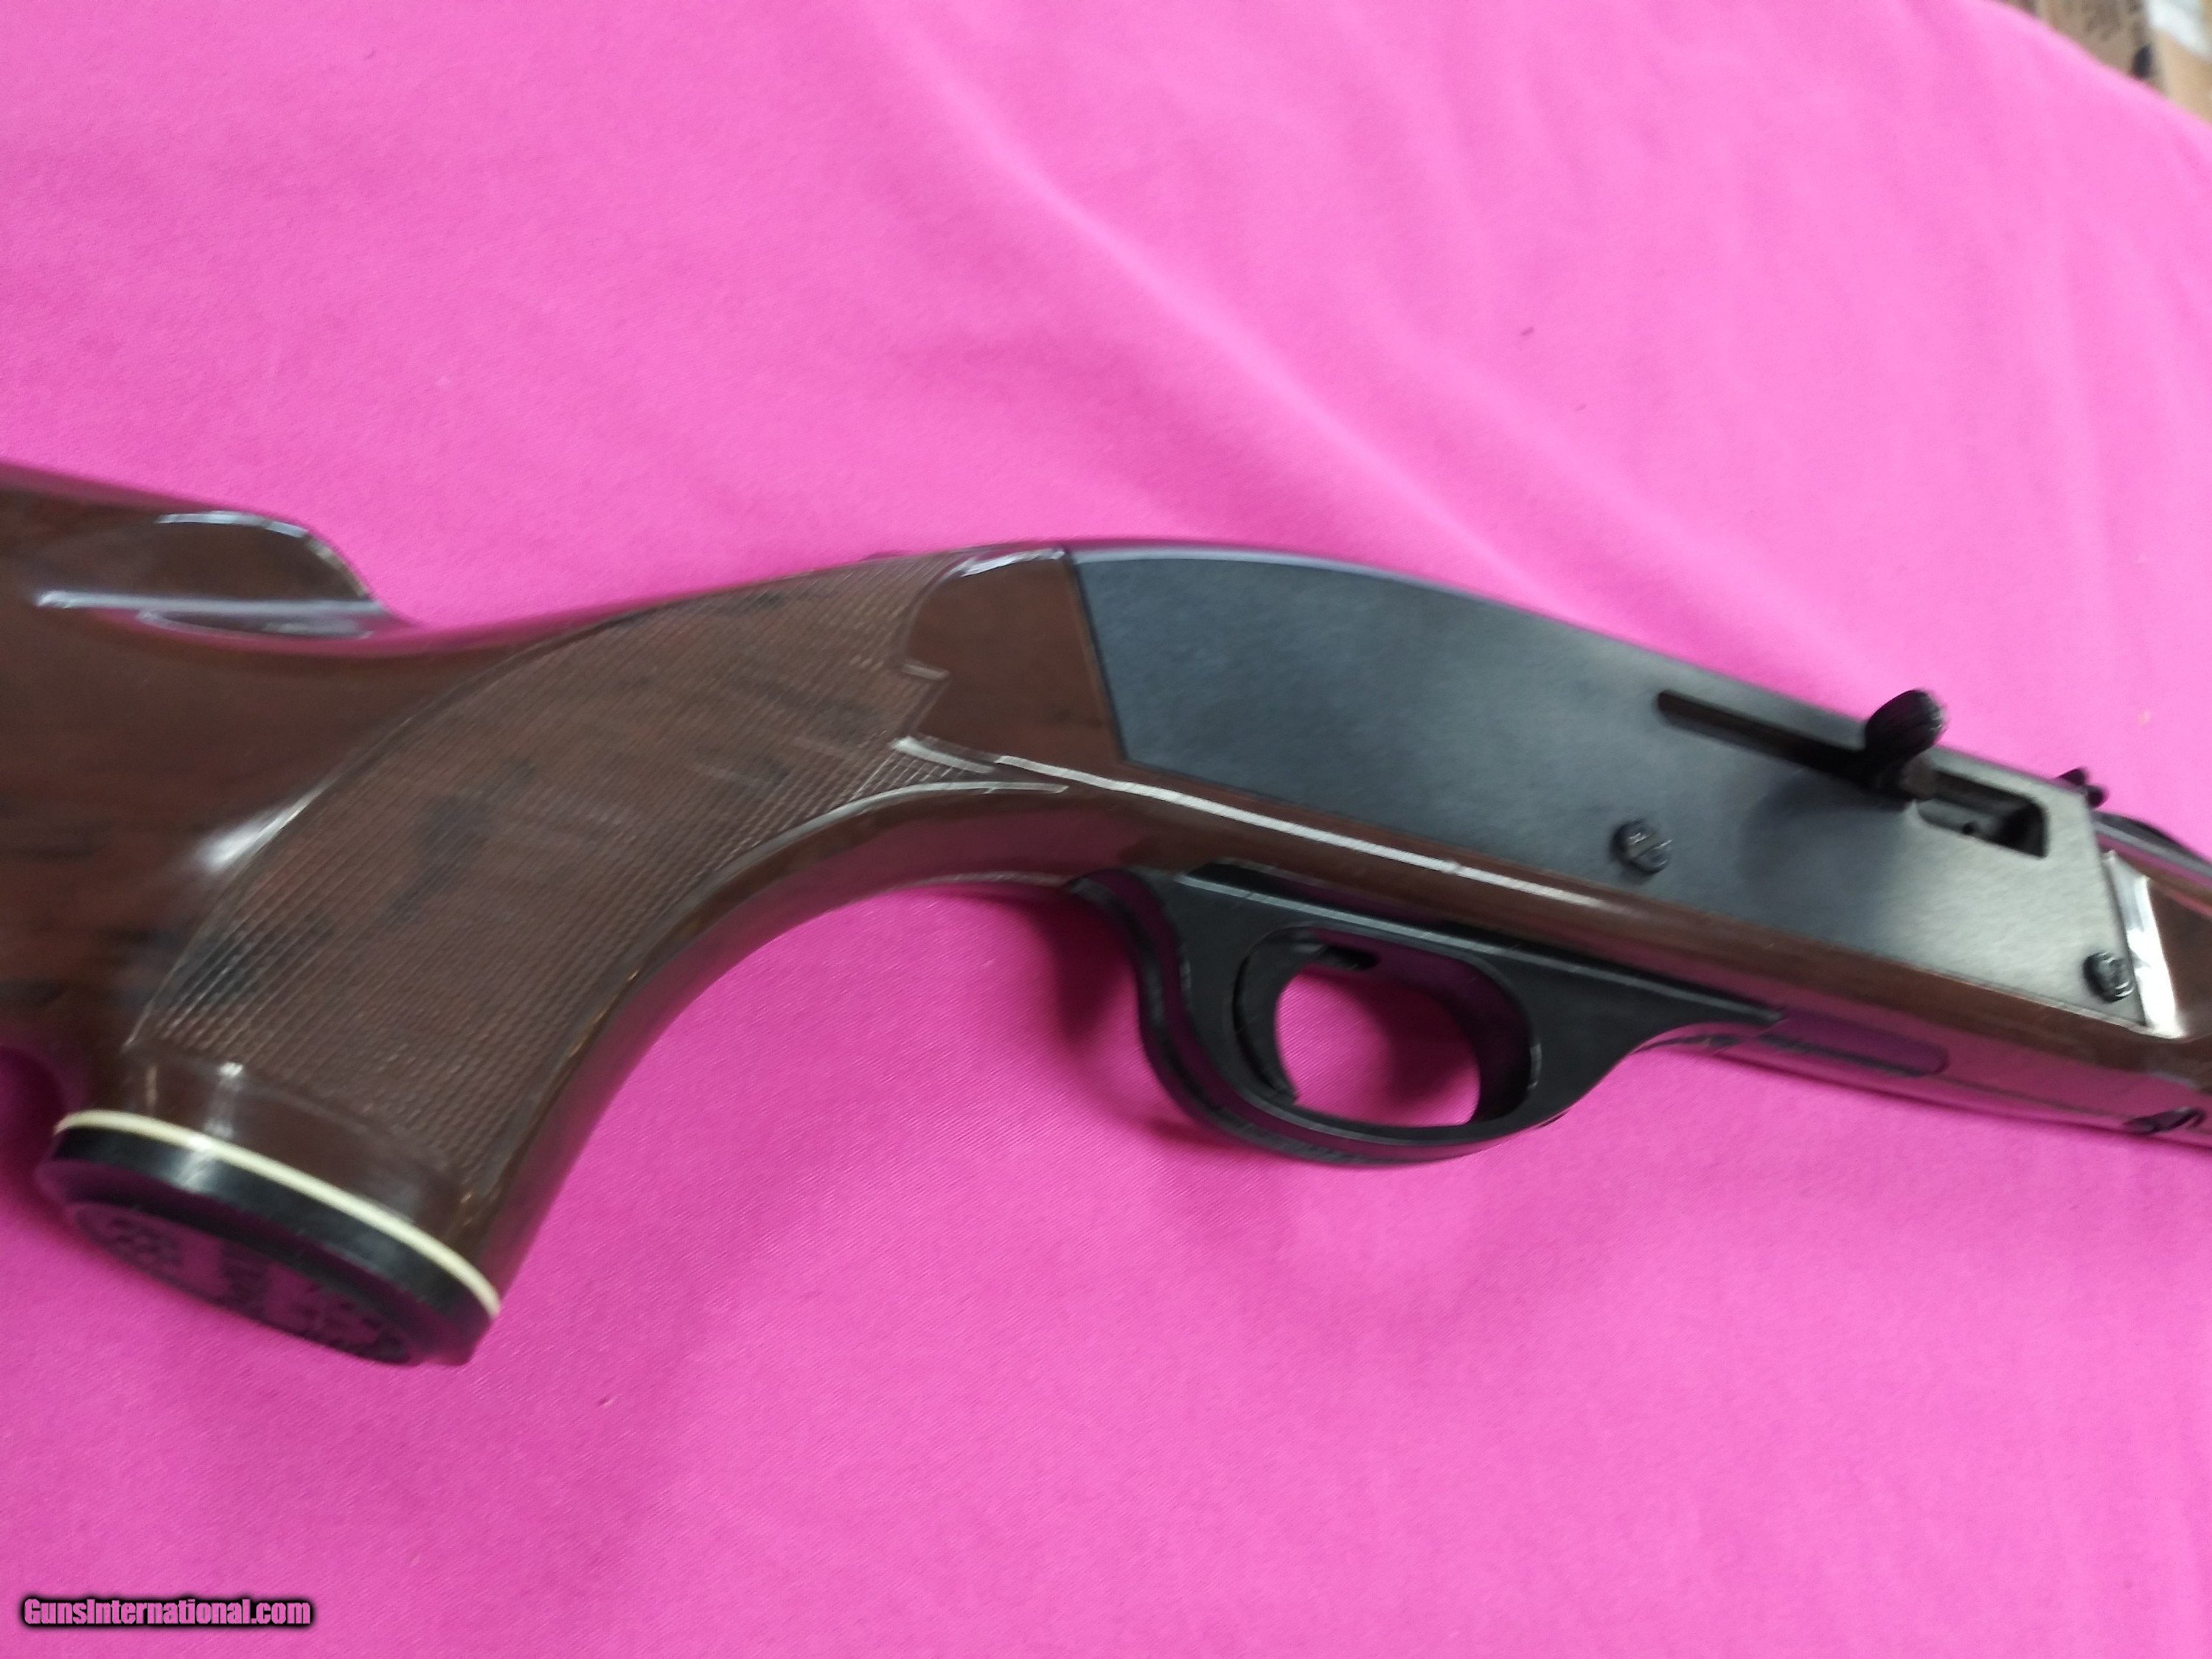 remington nylon 66 apache .22 rifle serial number lookup